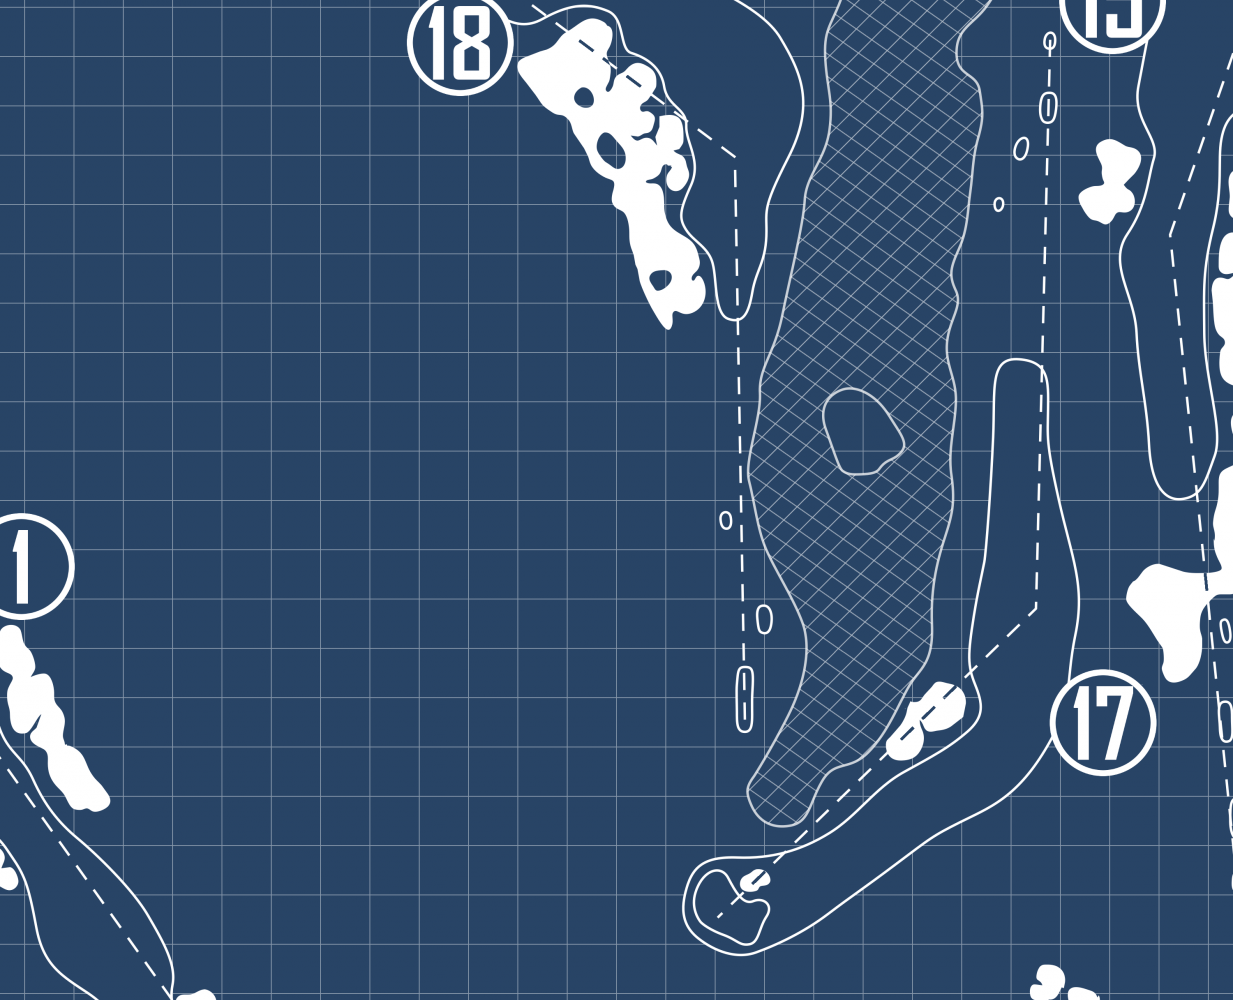 Calusa Pines Golf Club Blueprint (Print)